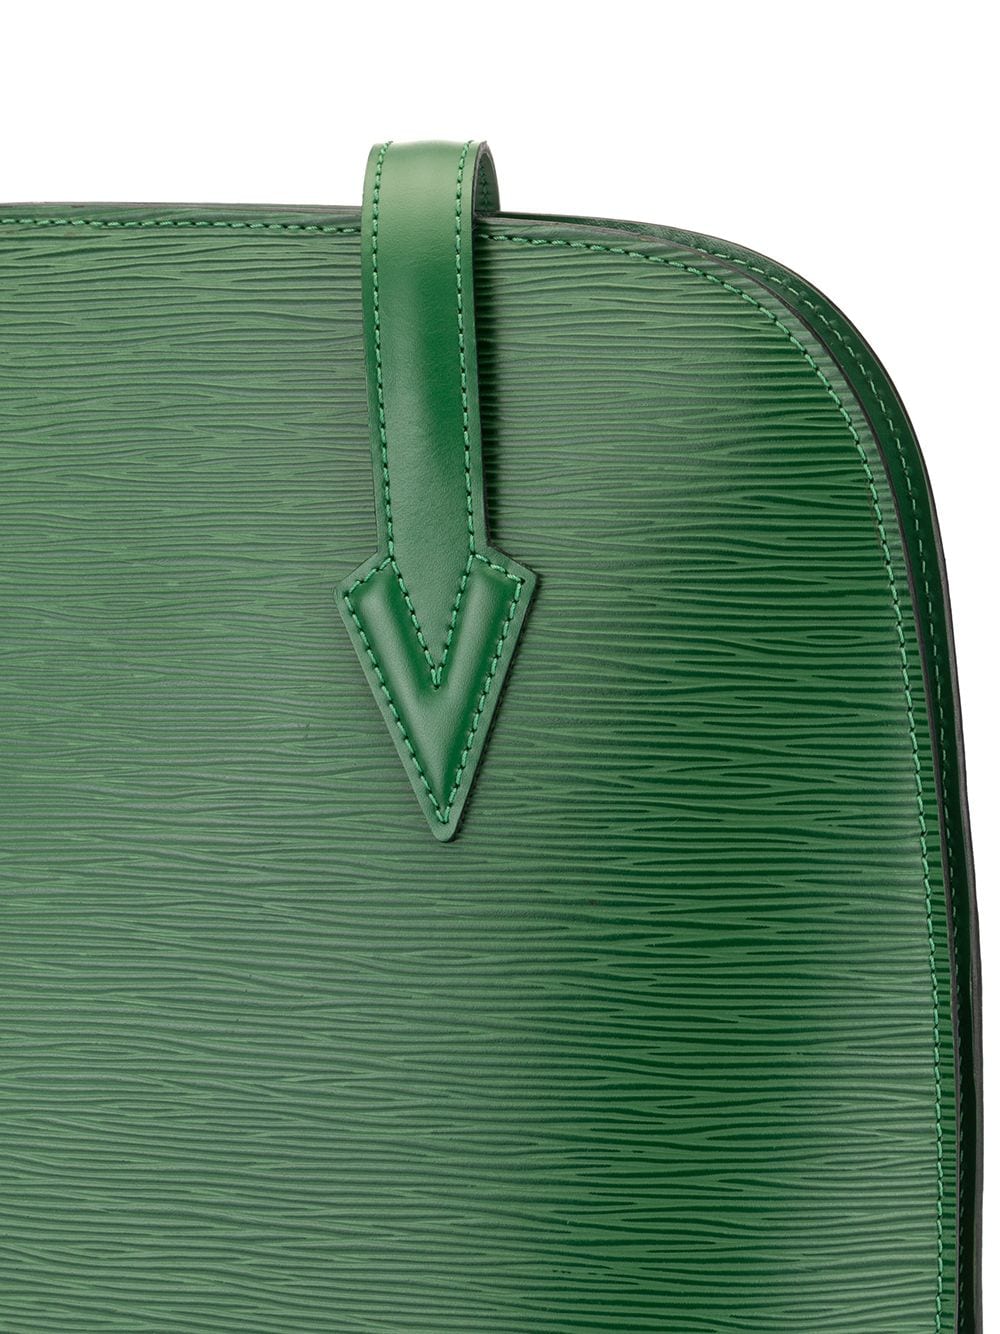 Vintage Louis Vuitton Lussac Green Epi Leather